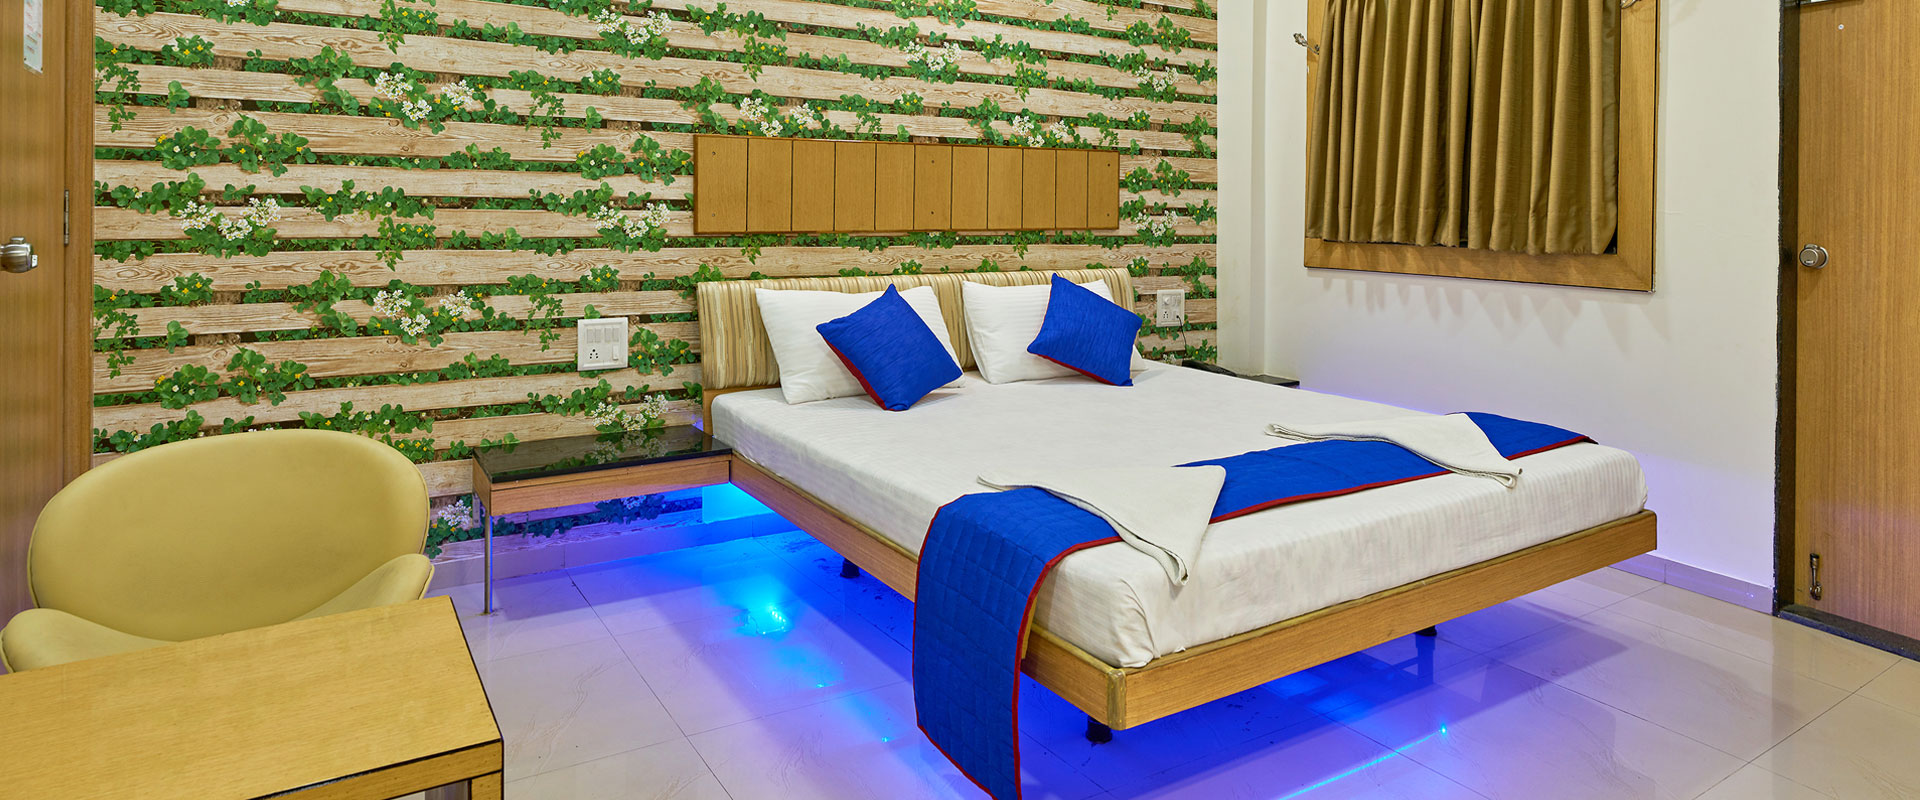 Hotel Ganeshratna-Rooms